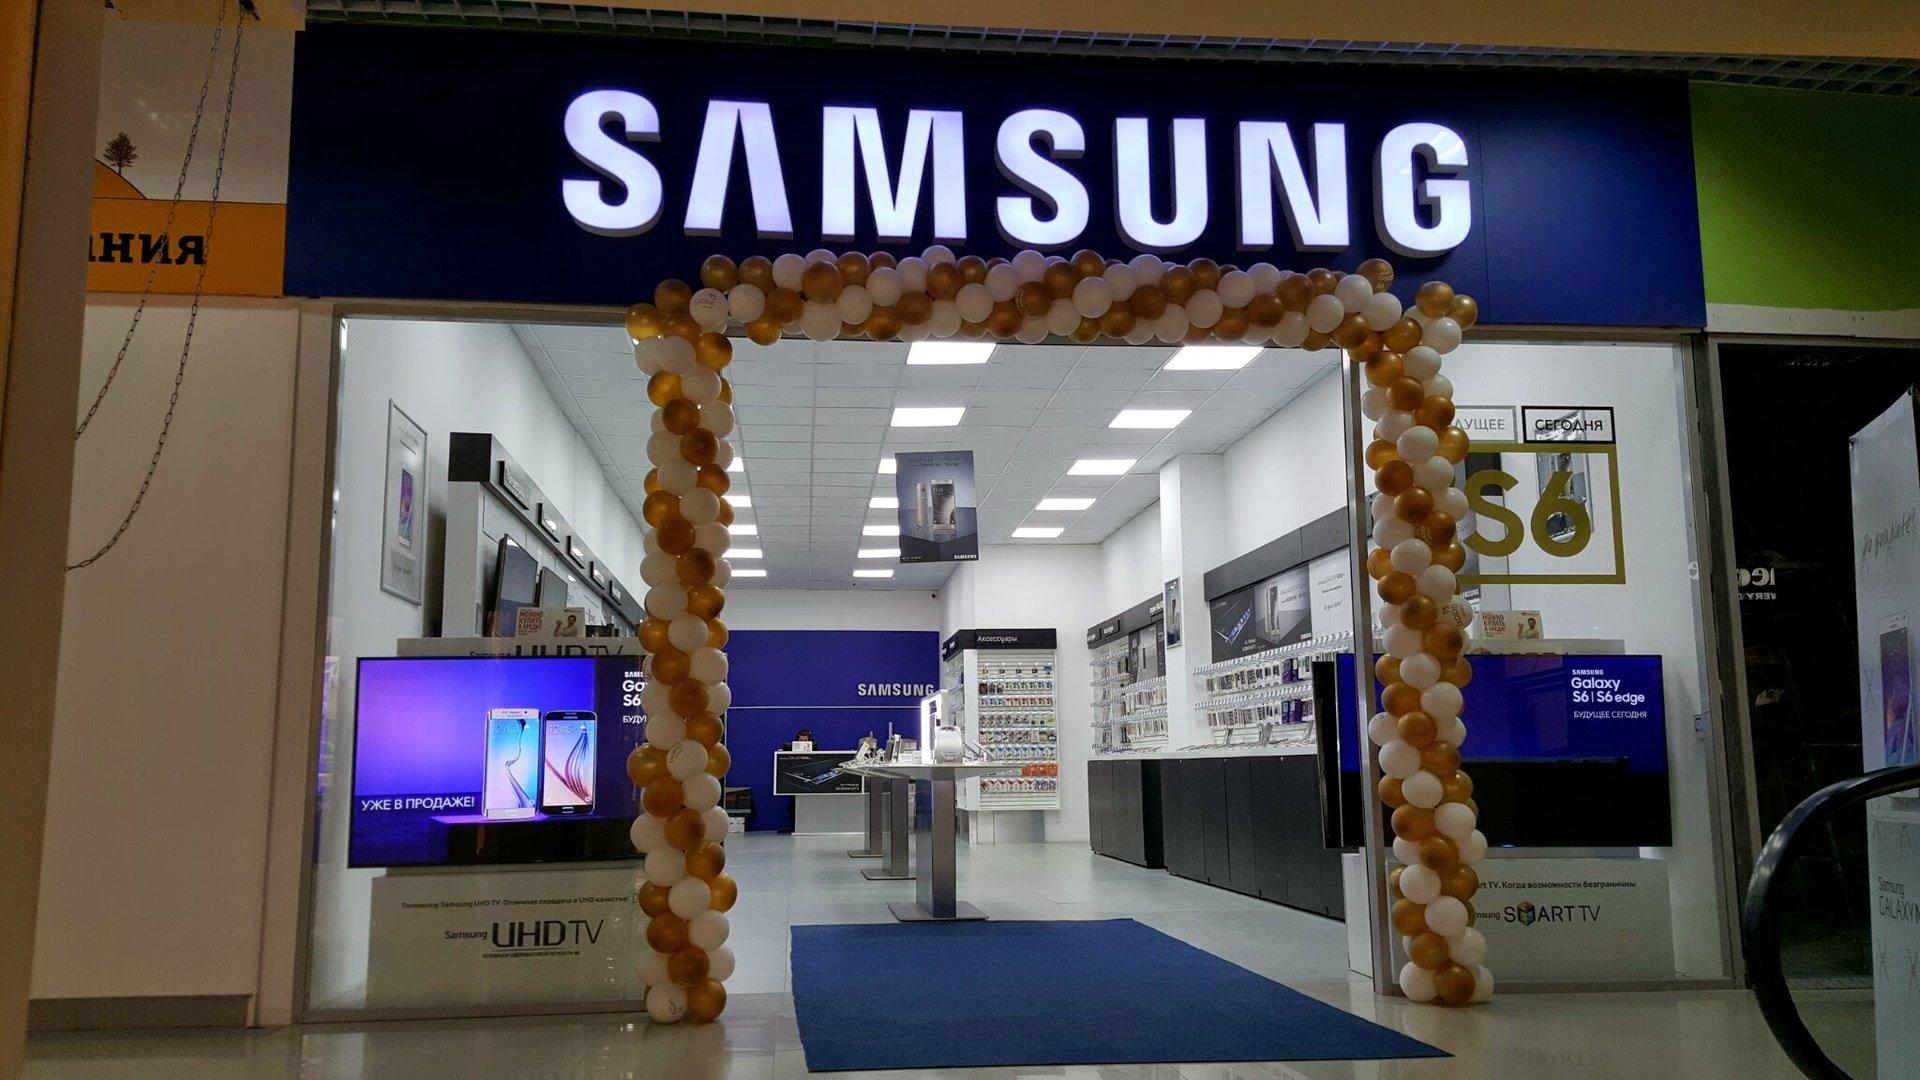 Samsung Store